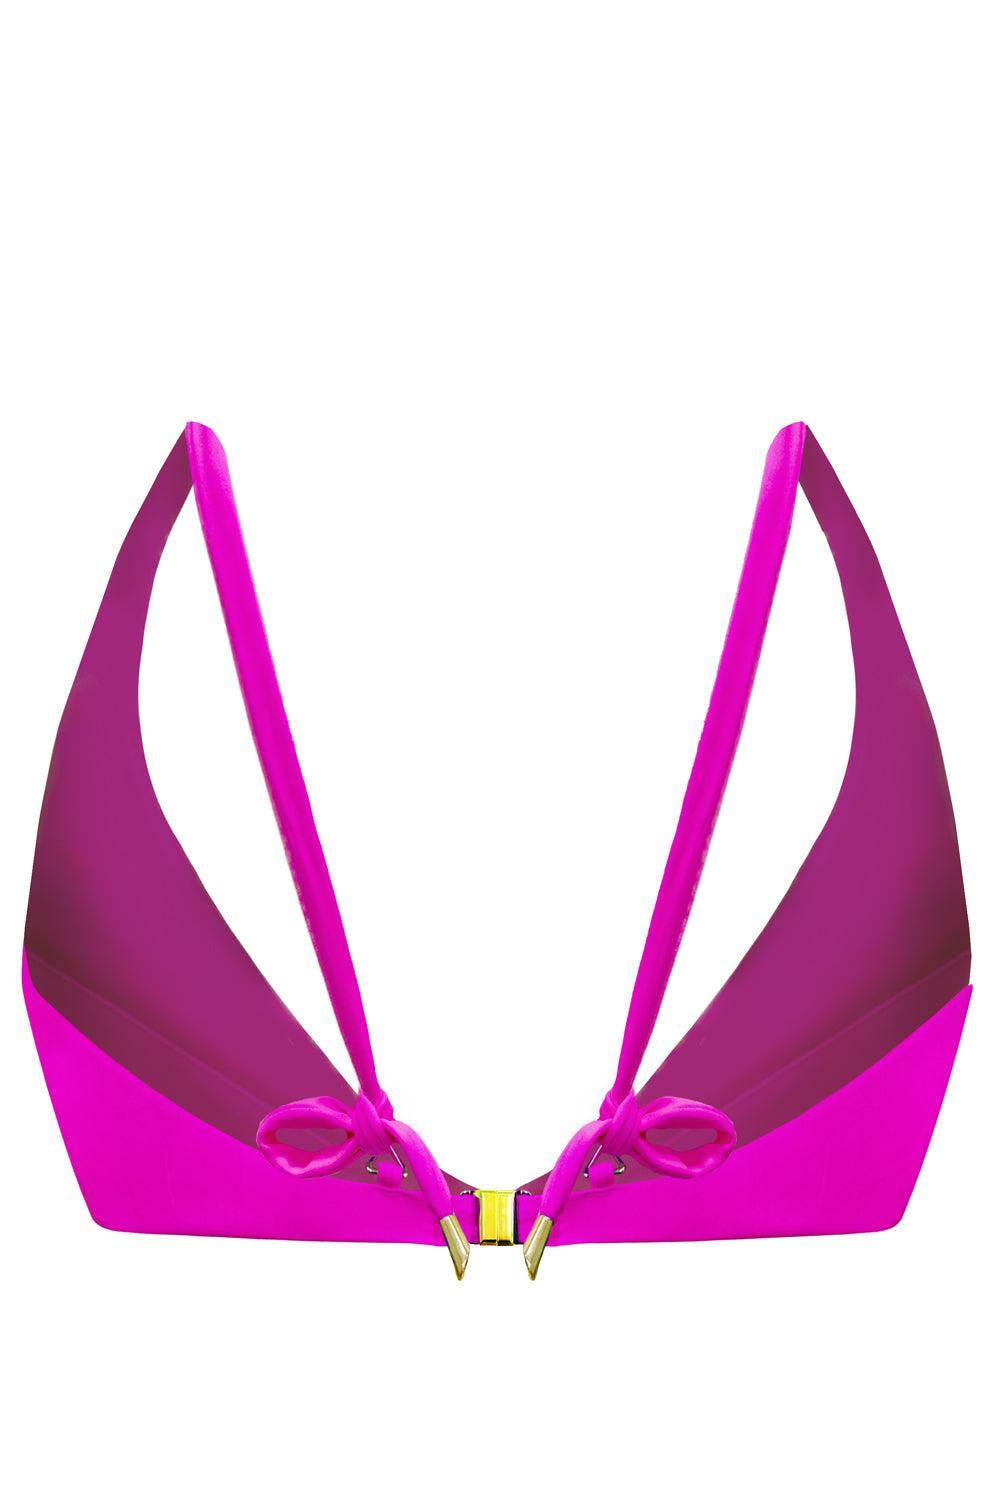 Radiya Fuchsia bikini top - Bikini top by yesUndress. Shop on yesUndress